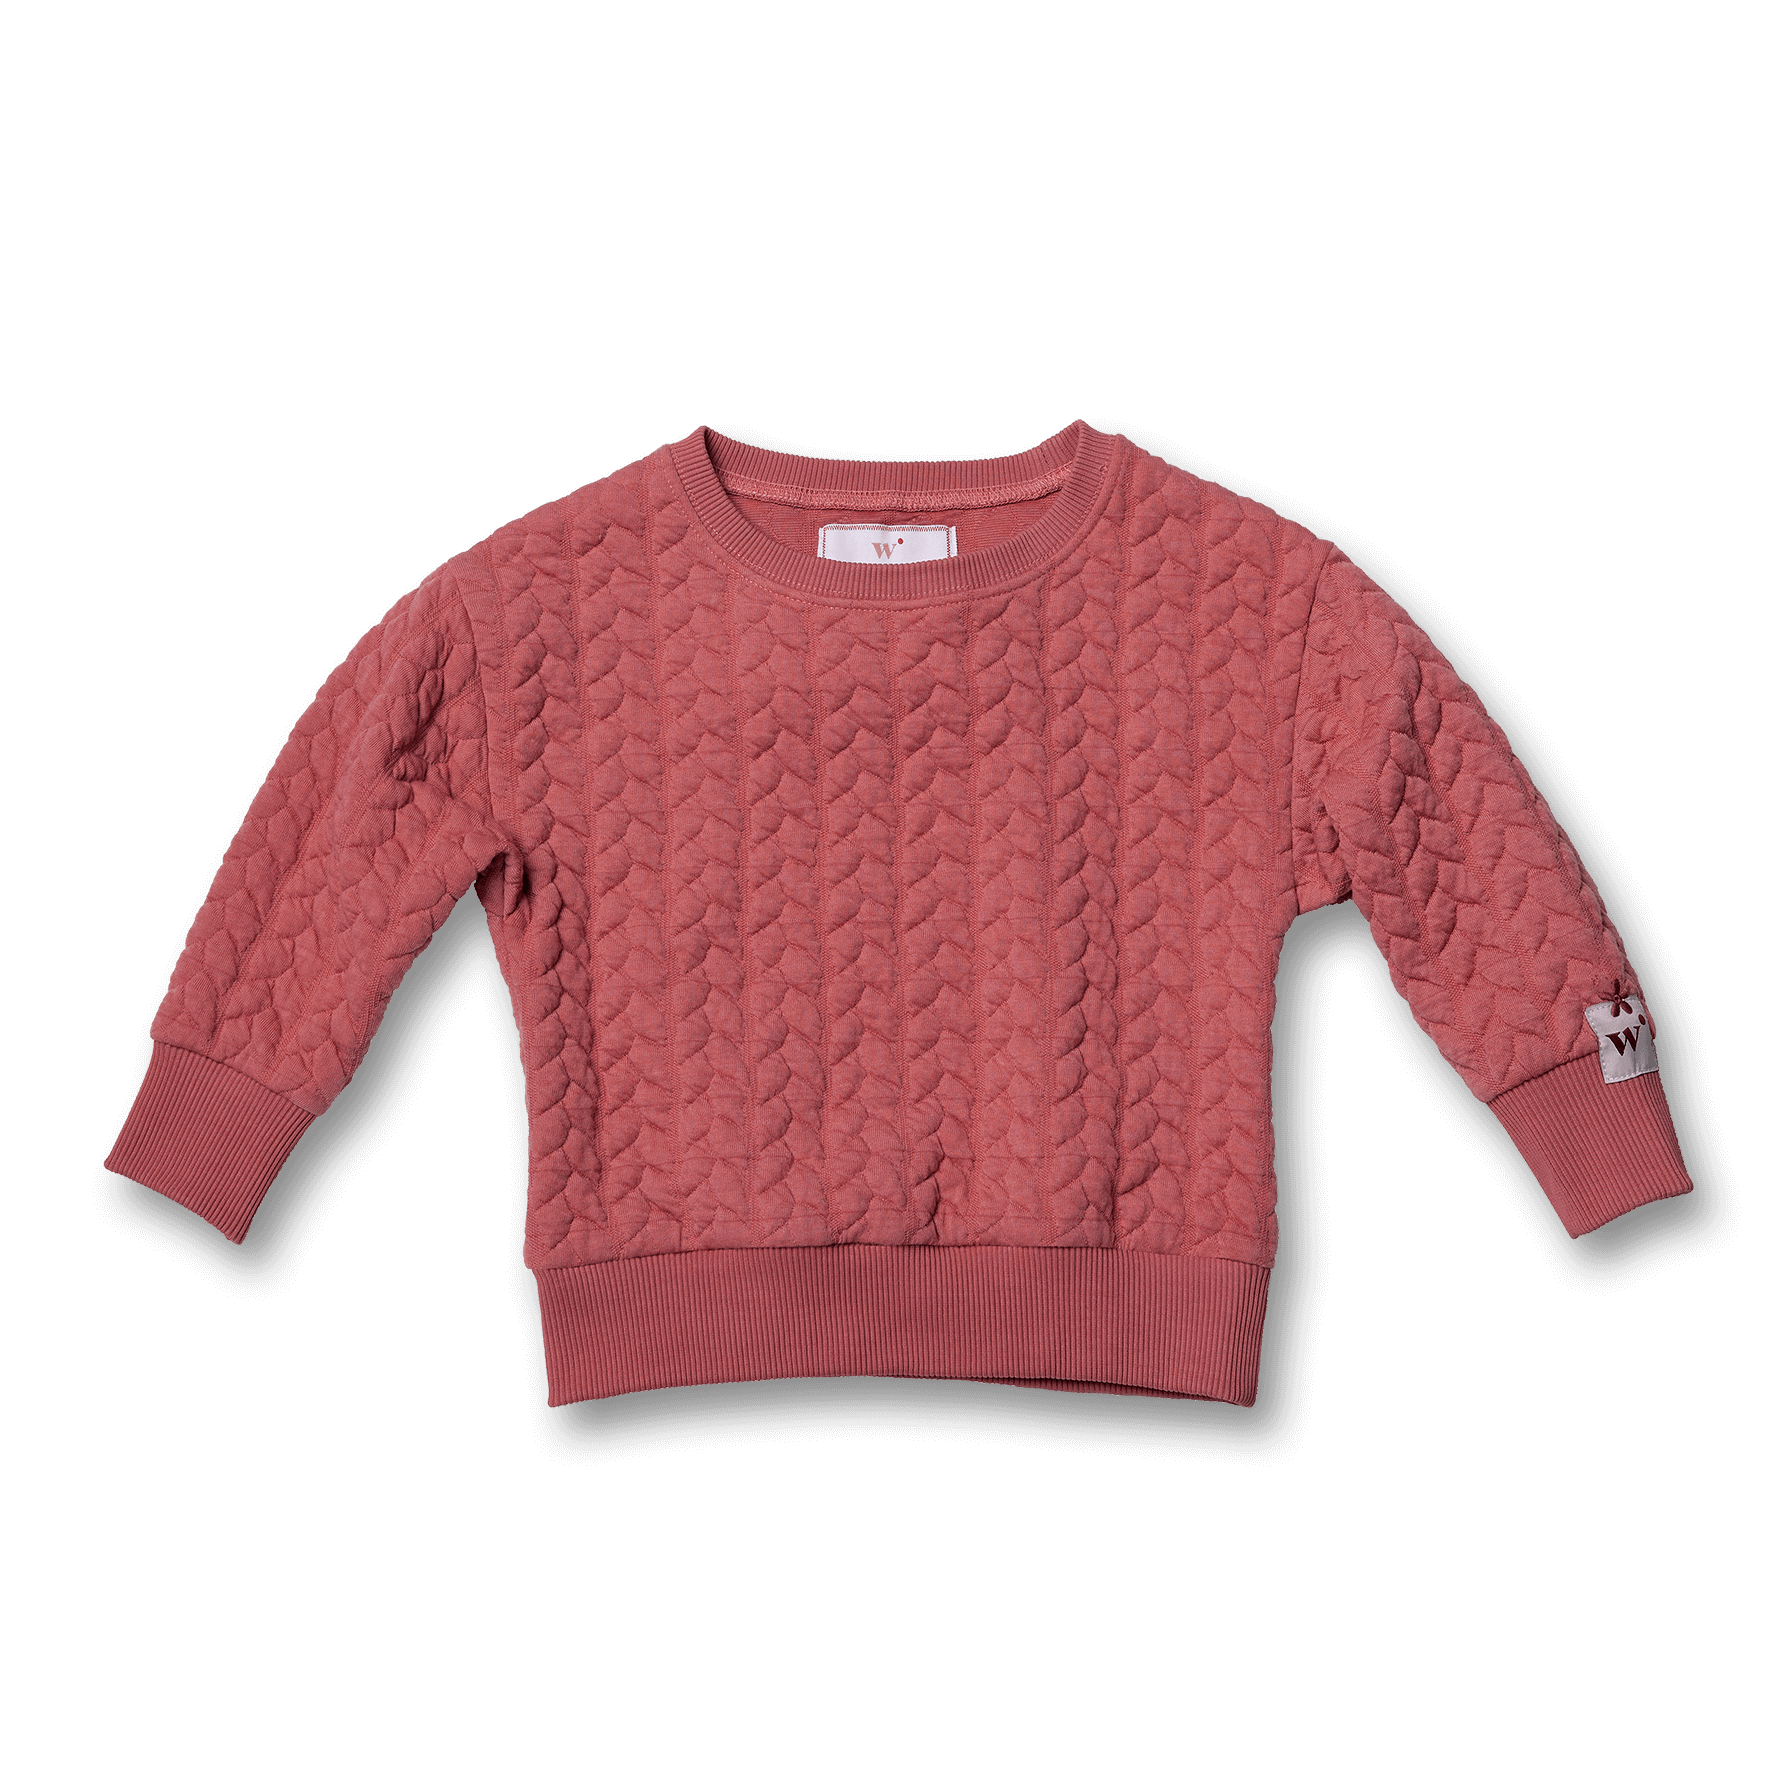 Quilted Jacquard Fabric Sweatshirt